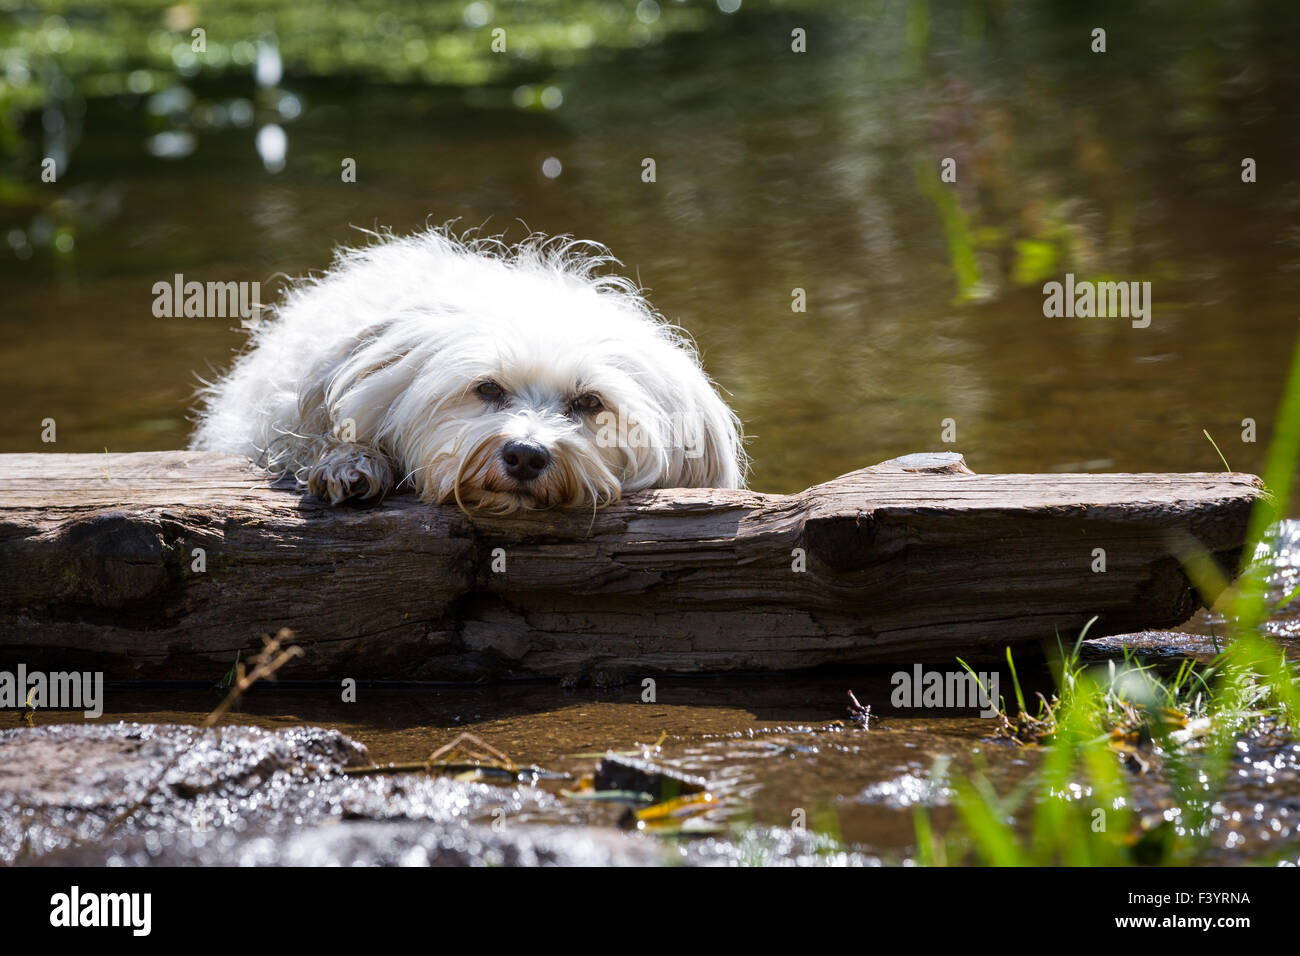 Dog in distress Stock Photo